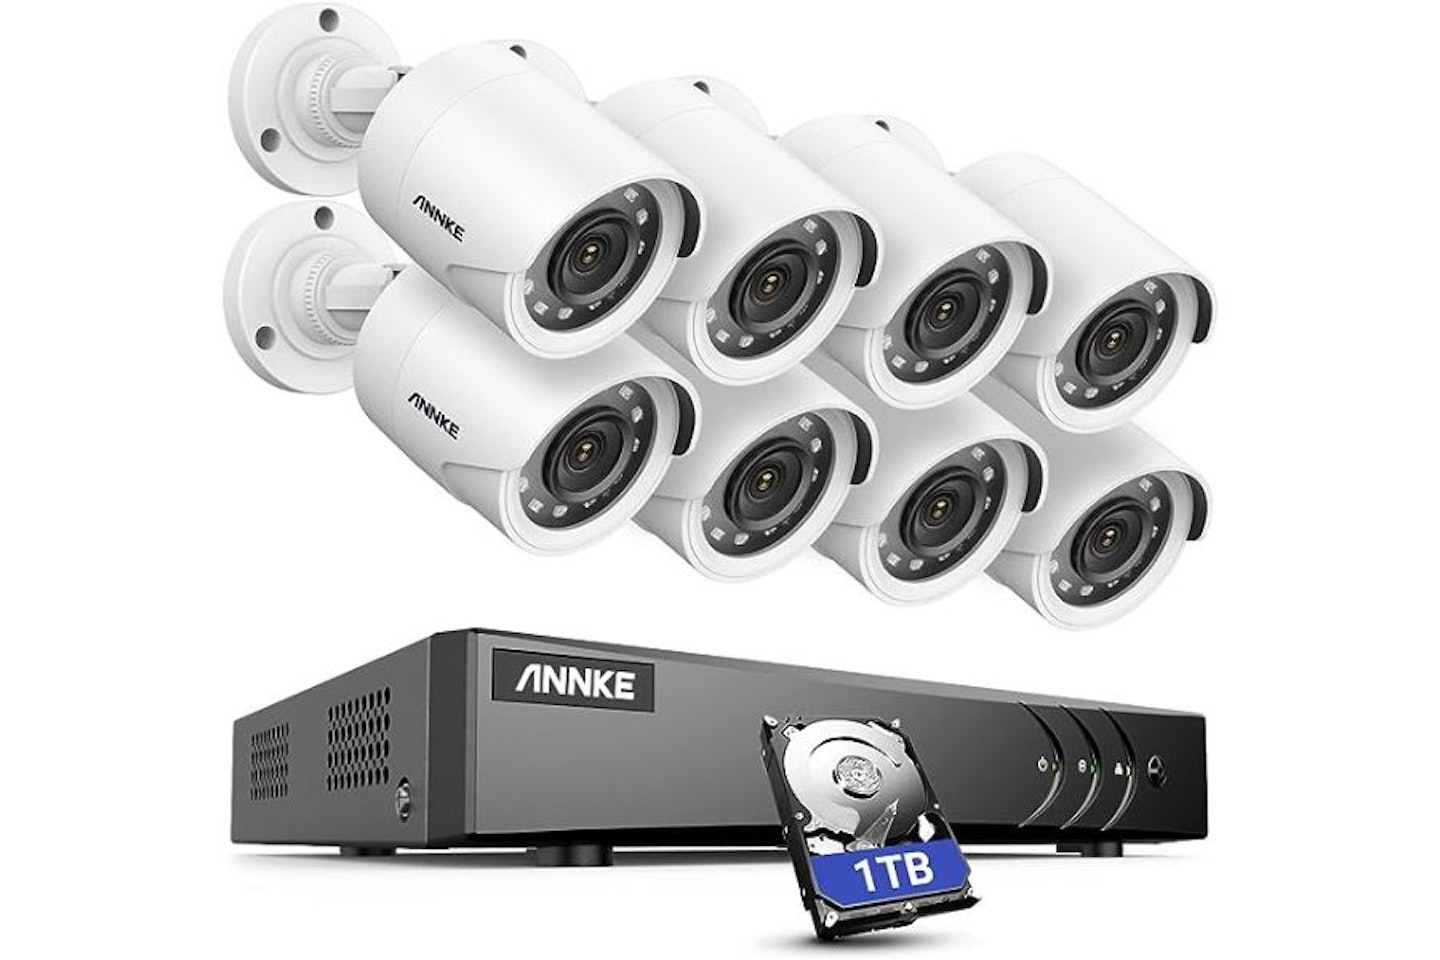 ANNKE CCTV system